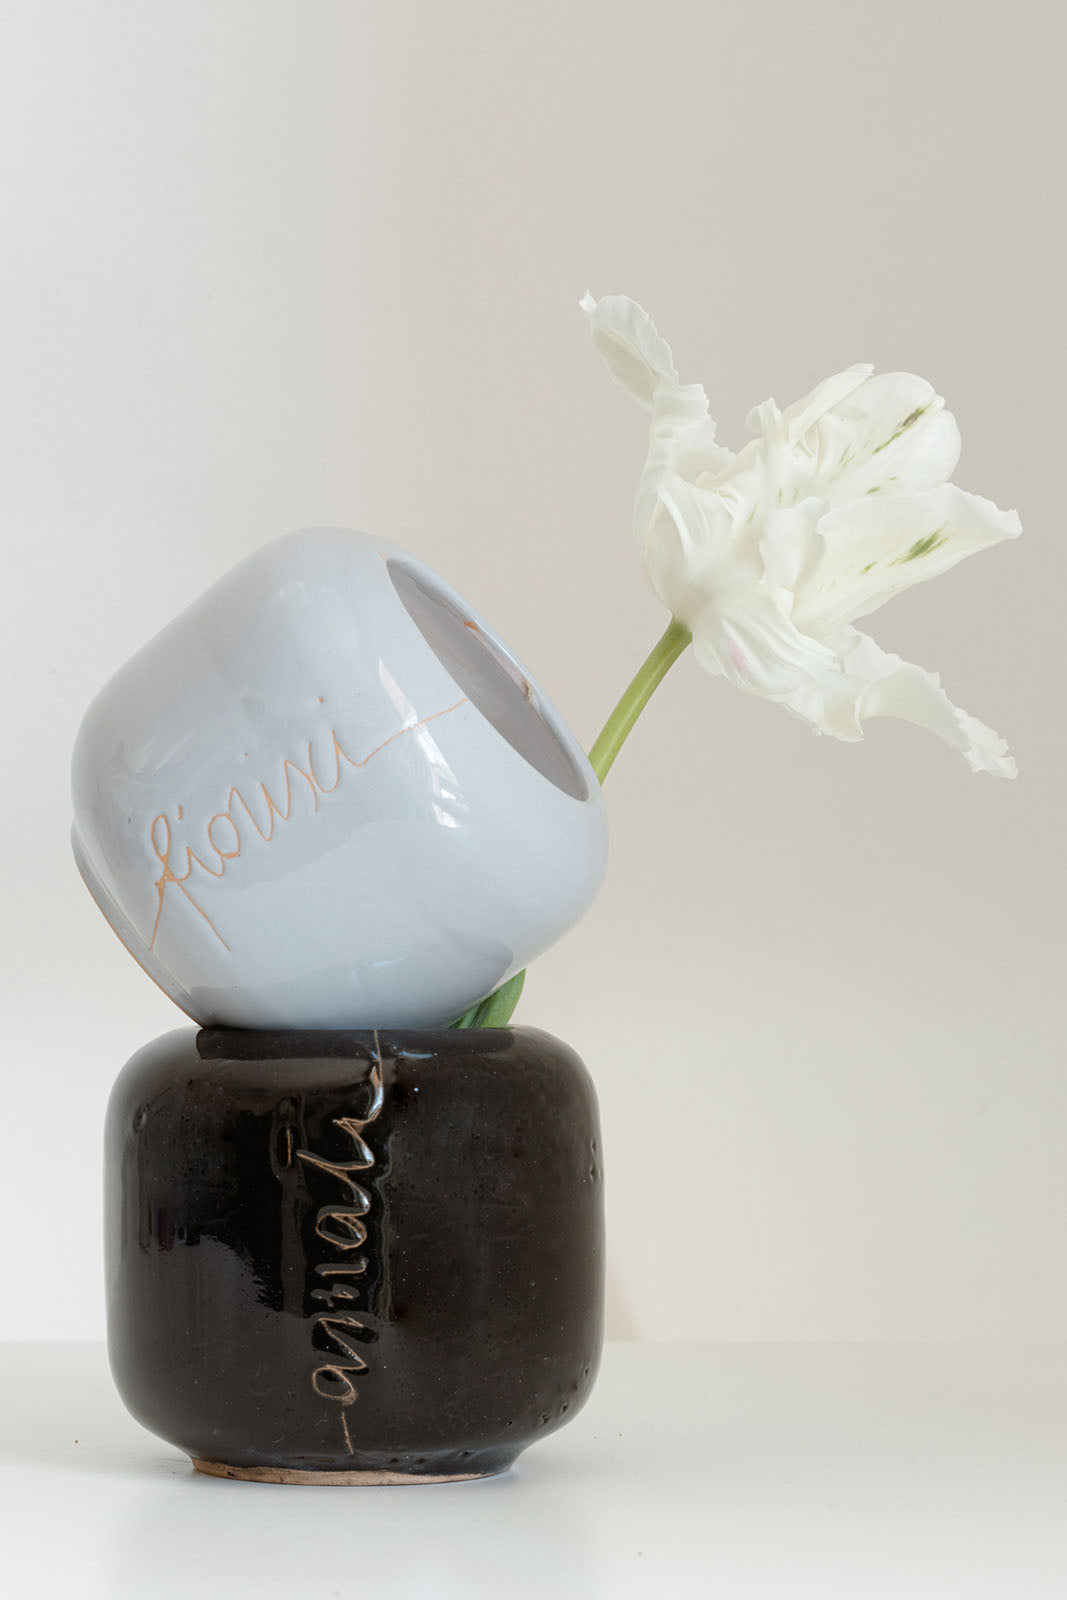 Vaso grigio in ceramica altezza 13 cm